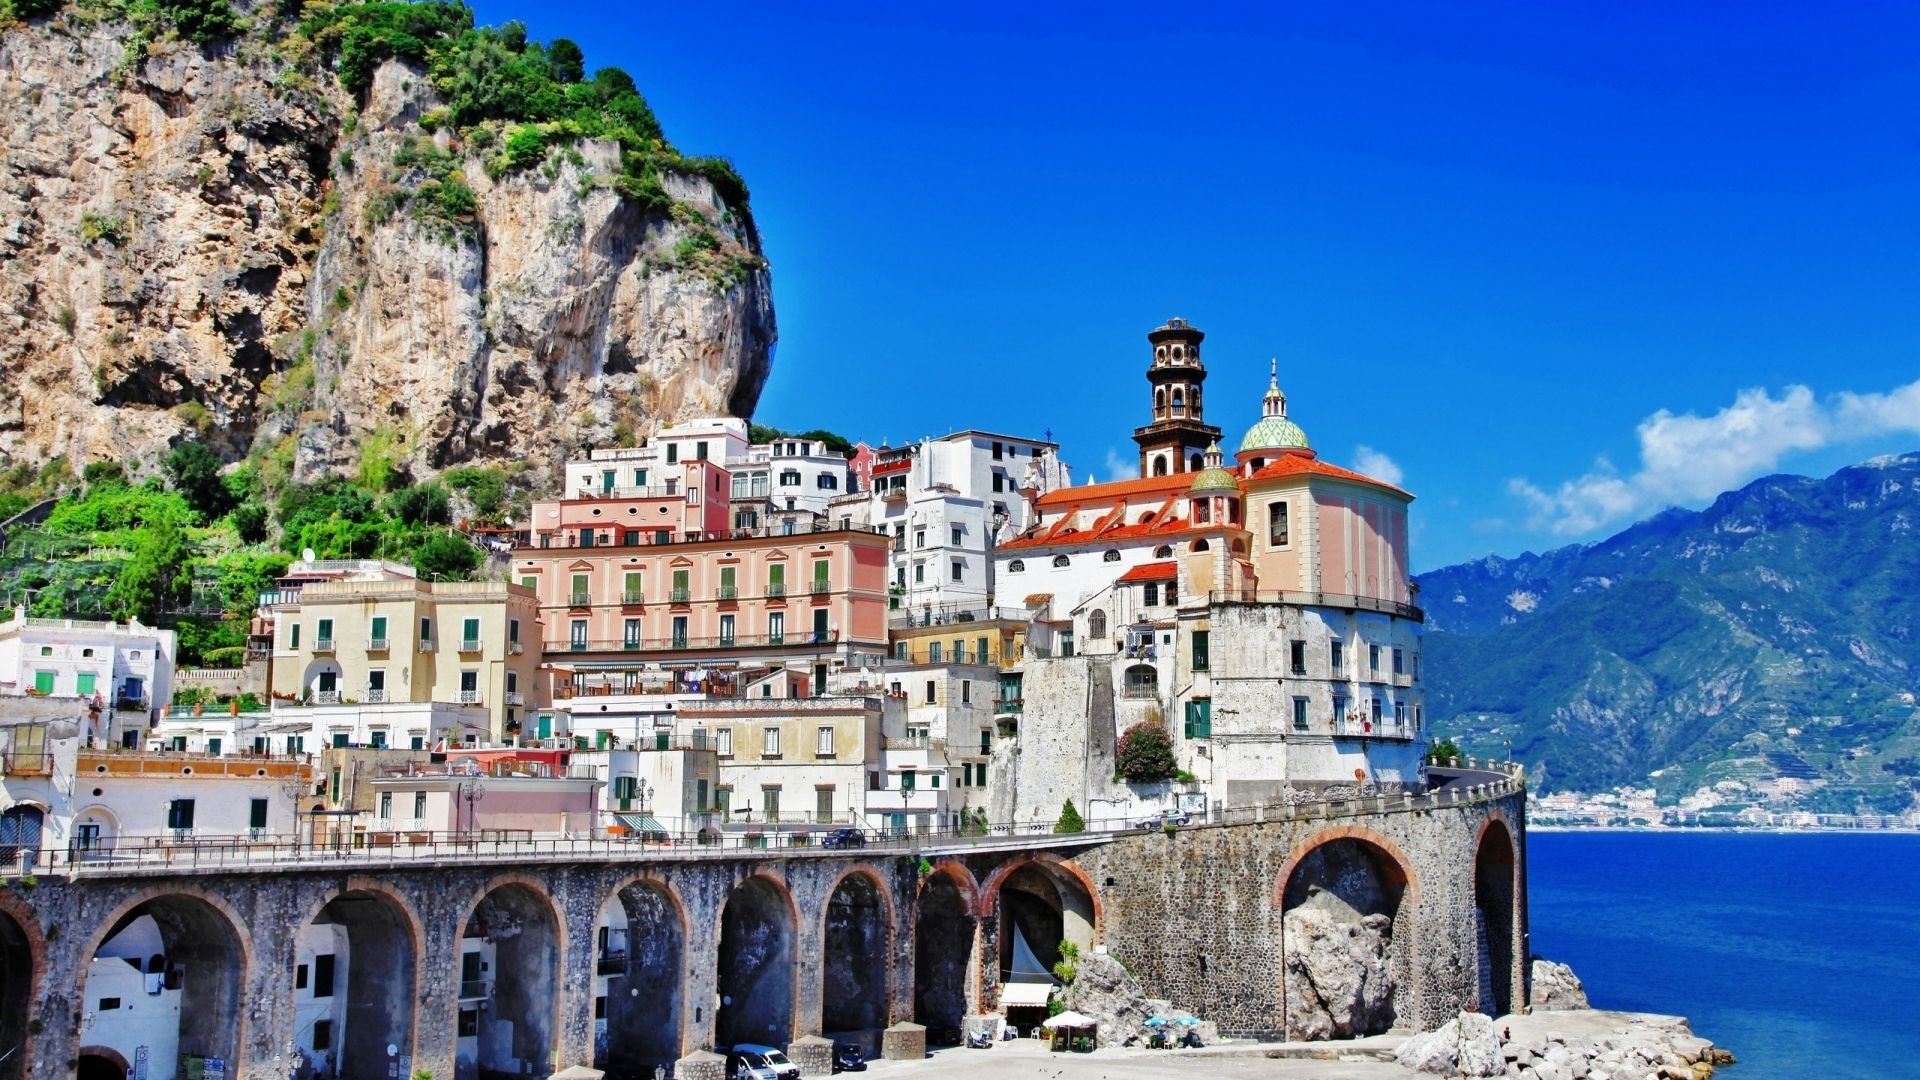 Town: Atrani, The Amalfi Coast, The Collegiate Church of St Mary Magdalene, The Campania region of south-western Italy. 1920x1080 Full HD Wallpaper.